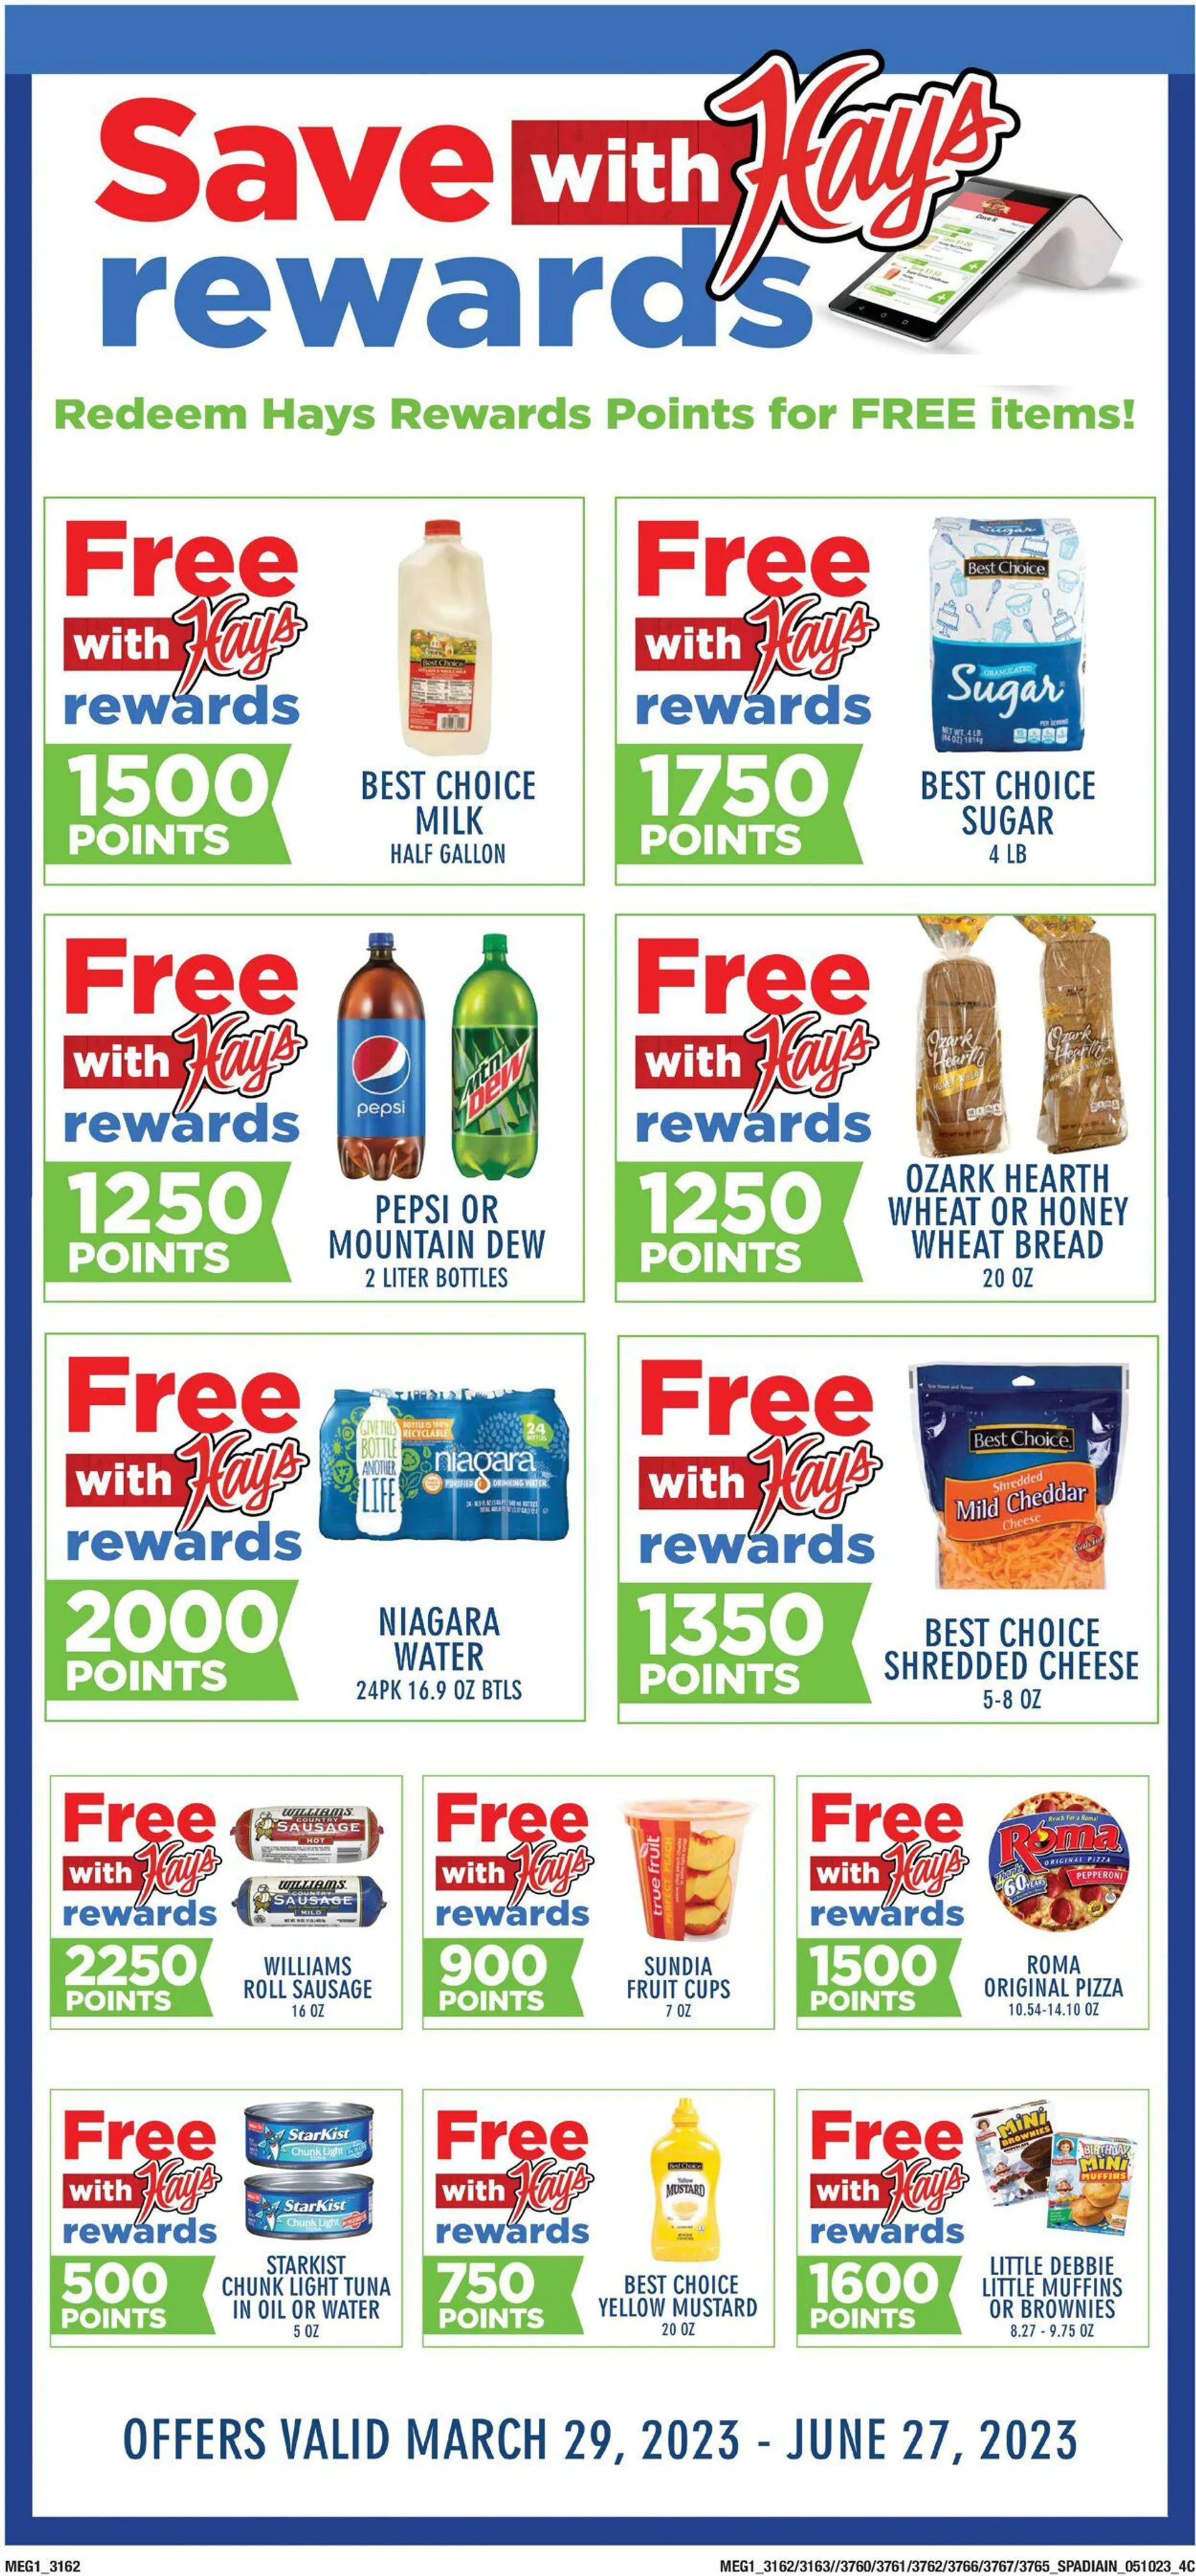 Hays Supermarket Current weekly ad - 2